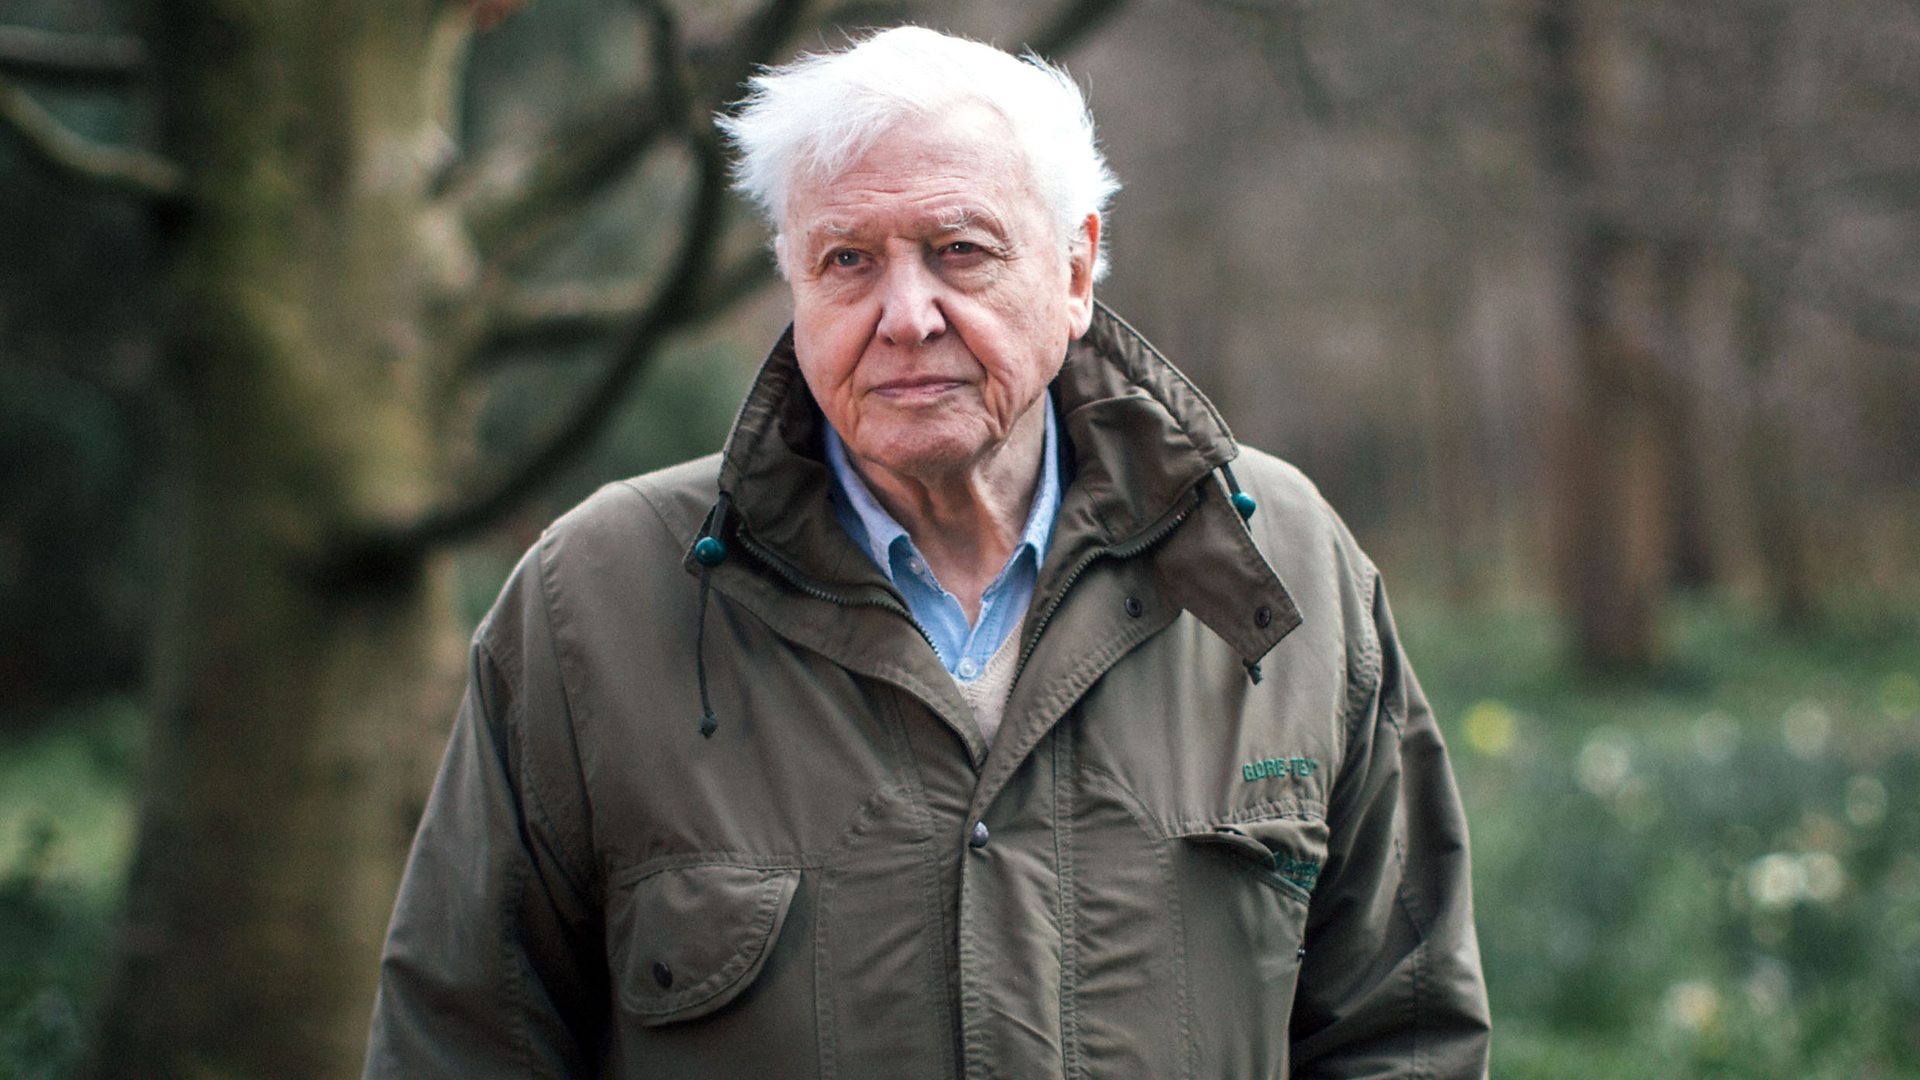 Sir David Frederick Attenborough